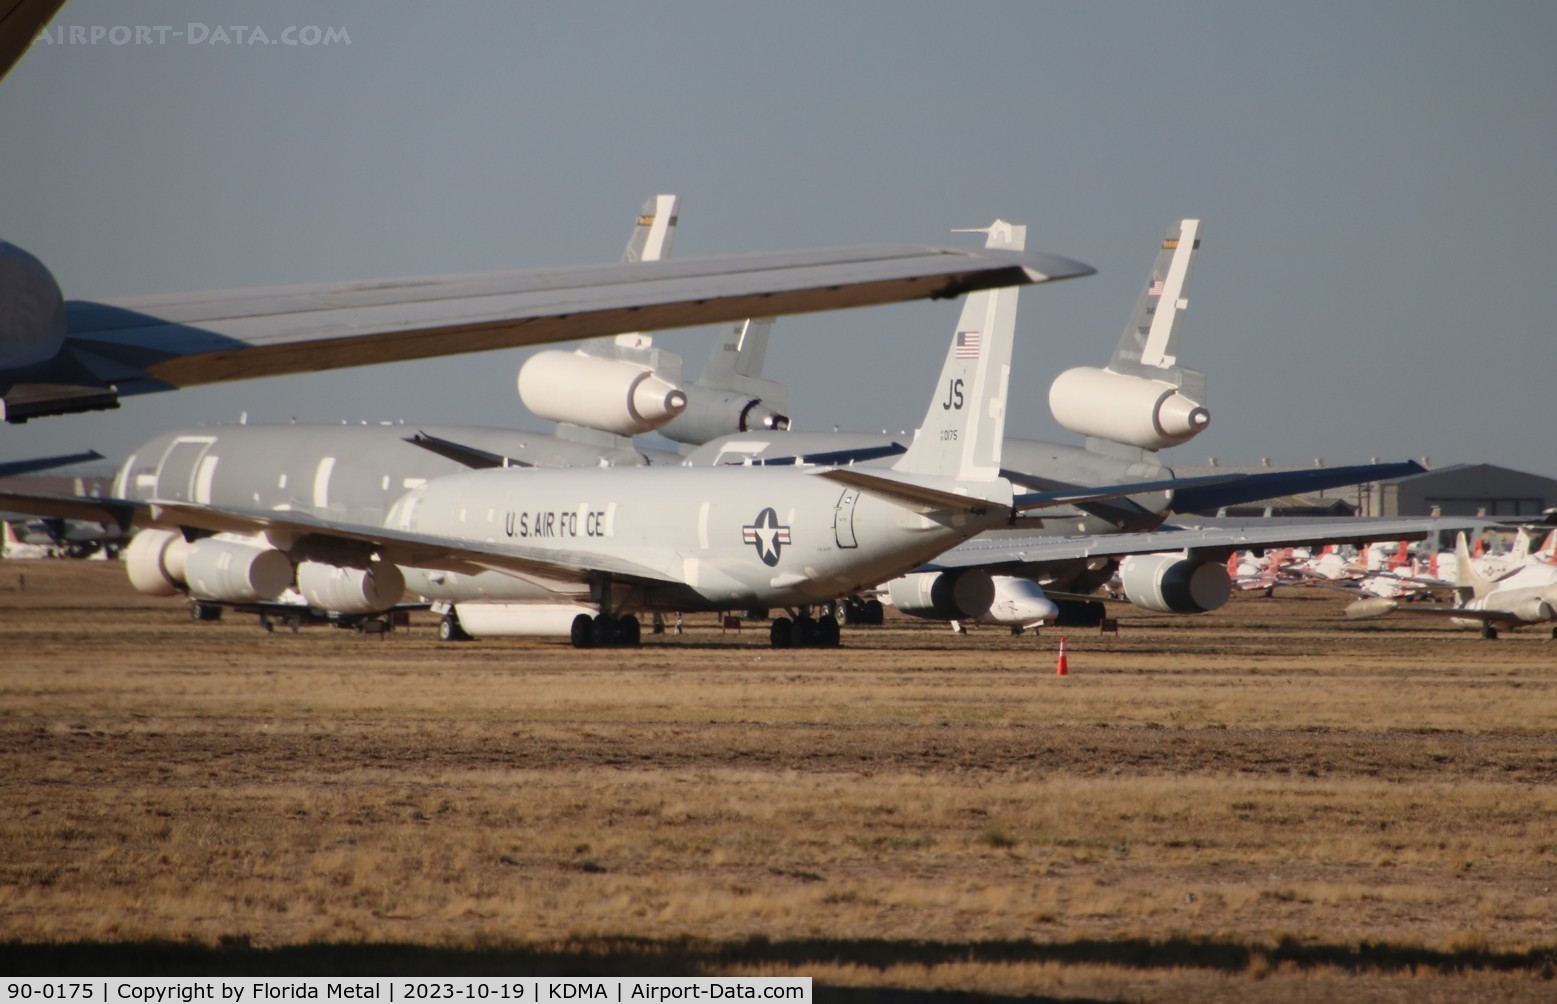 90-0175, 1968 Northrop Grumman E-8C J-STARS C/N 19621/652/T-3, E-8 zx